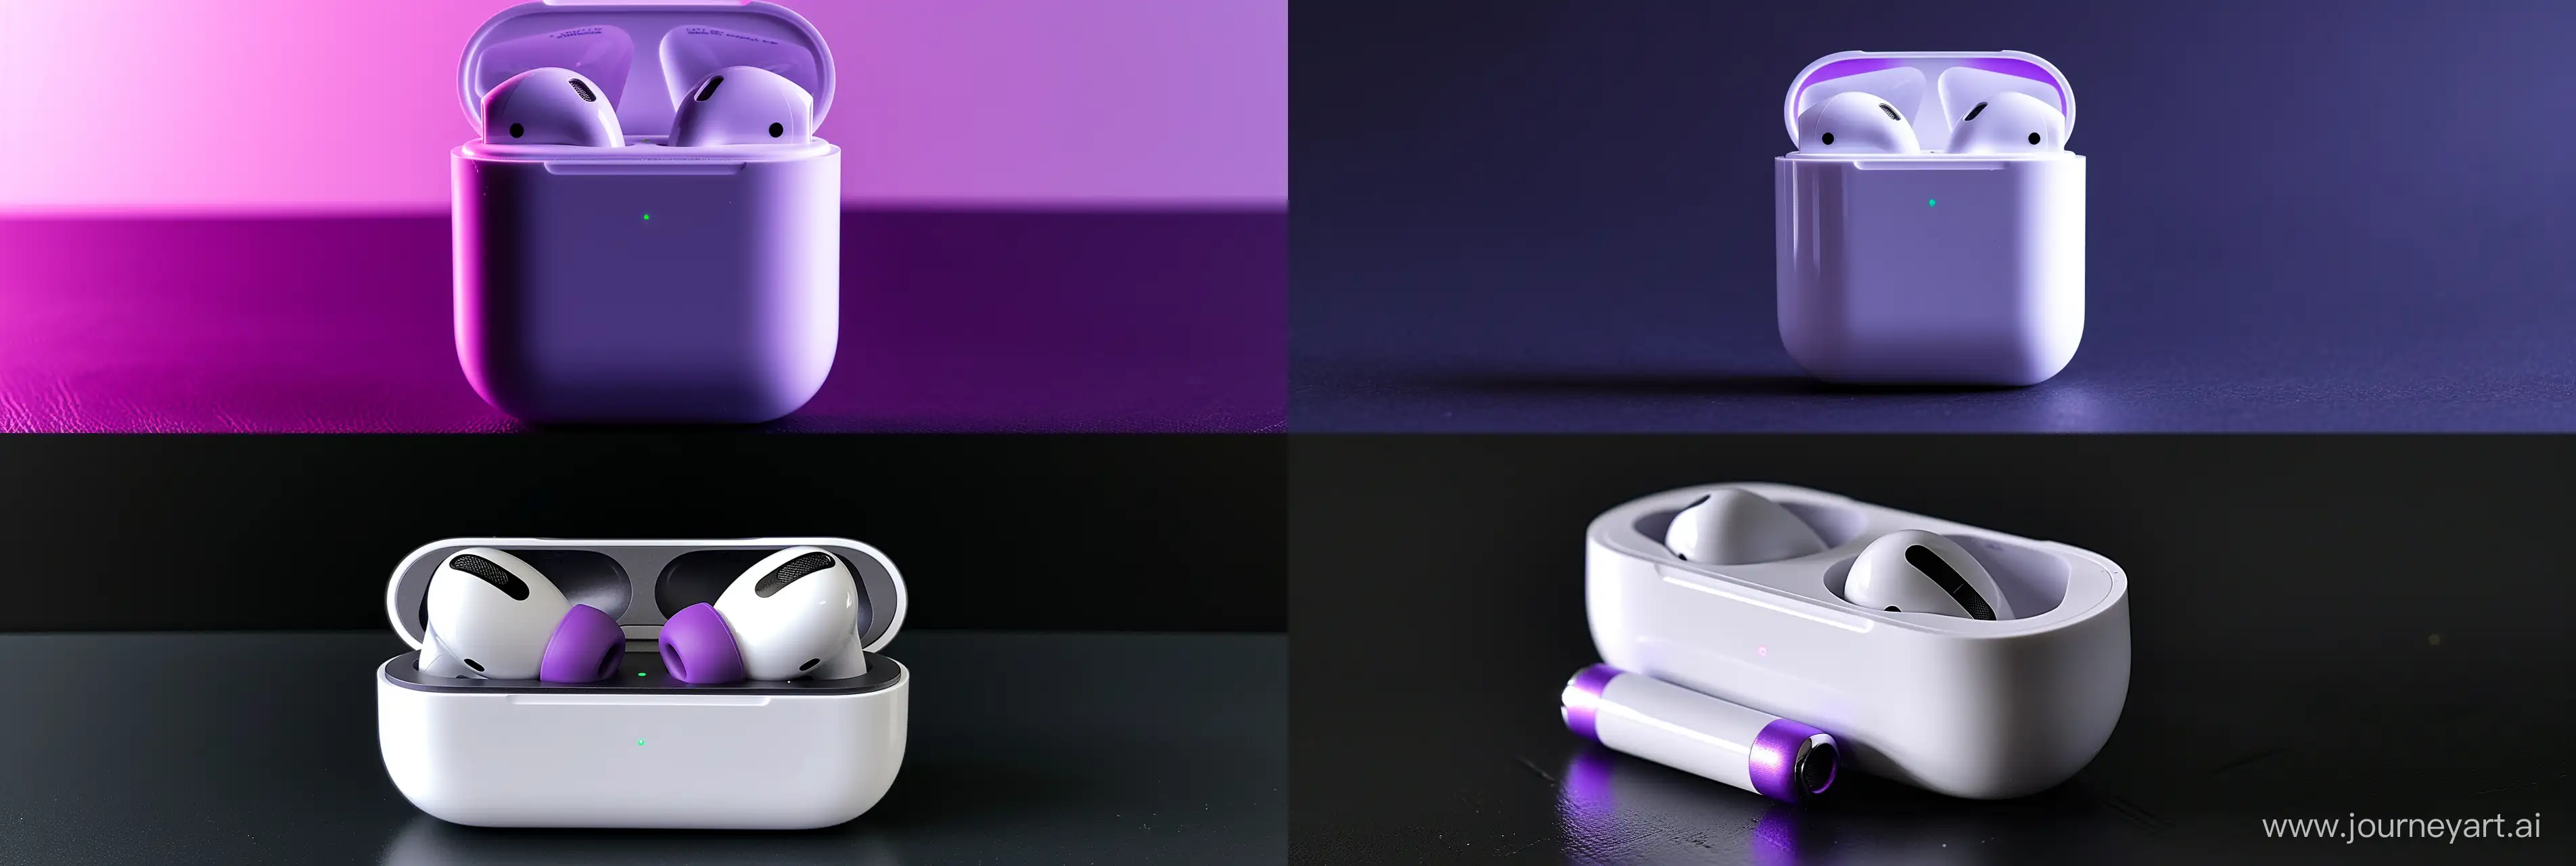 Sleek-Purple-Accented-AirPods-for-Trendy-Digital-Advertising